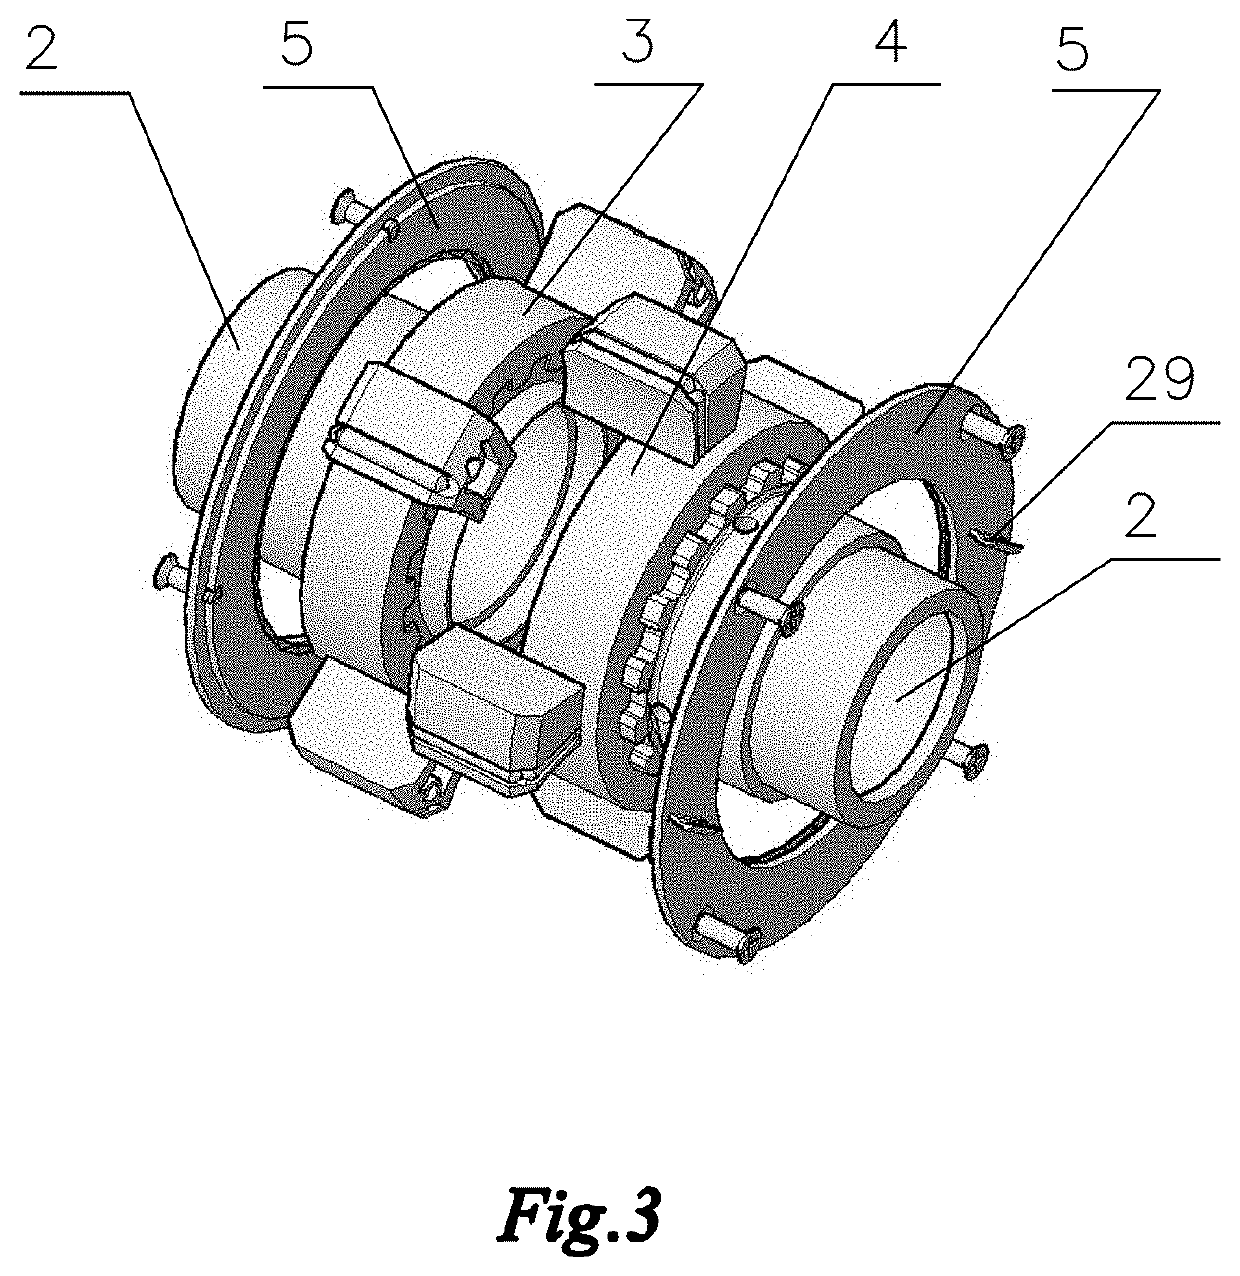 Rotary vane internal combustion engine